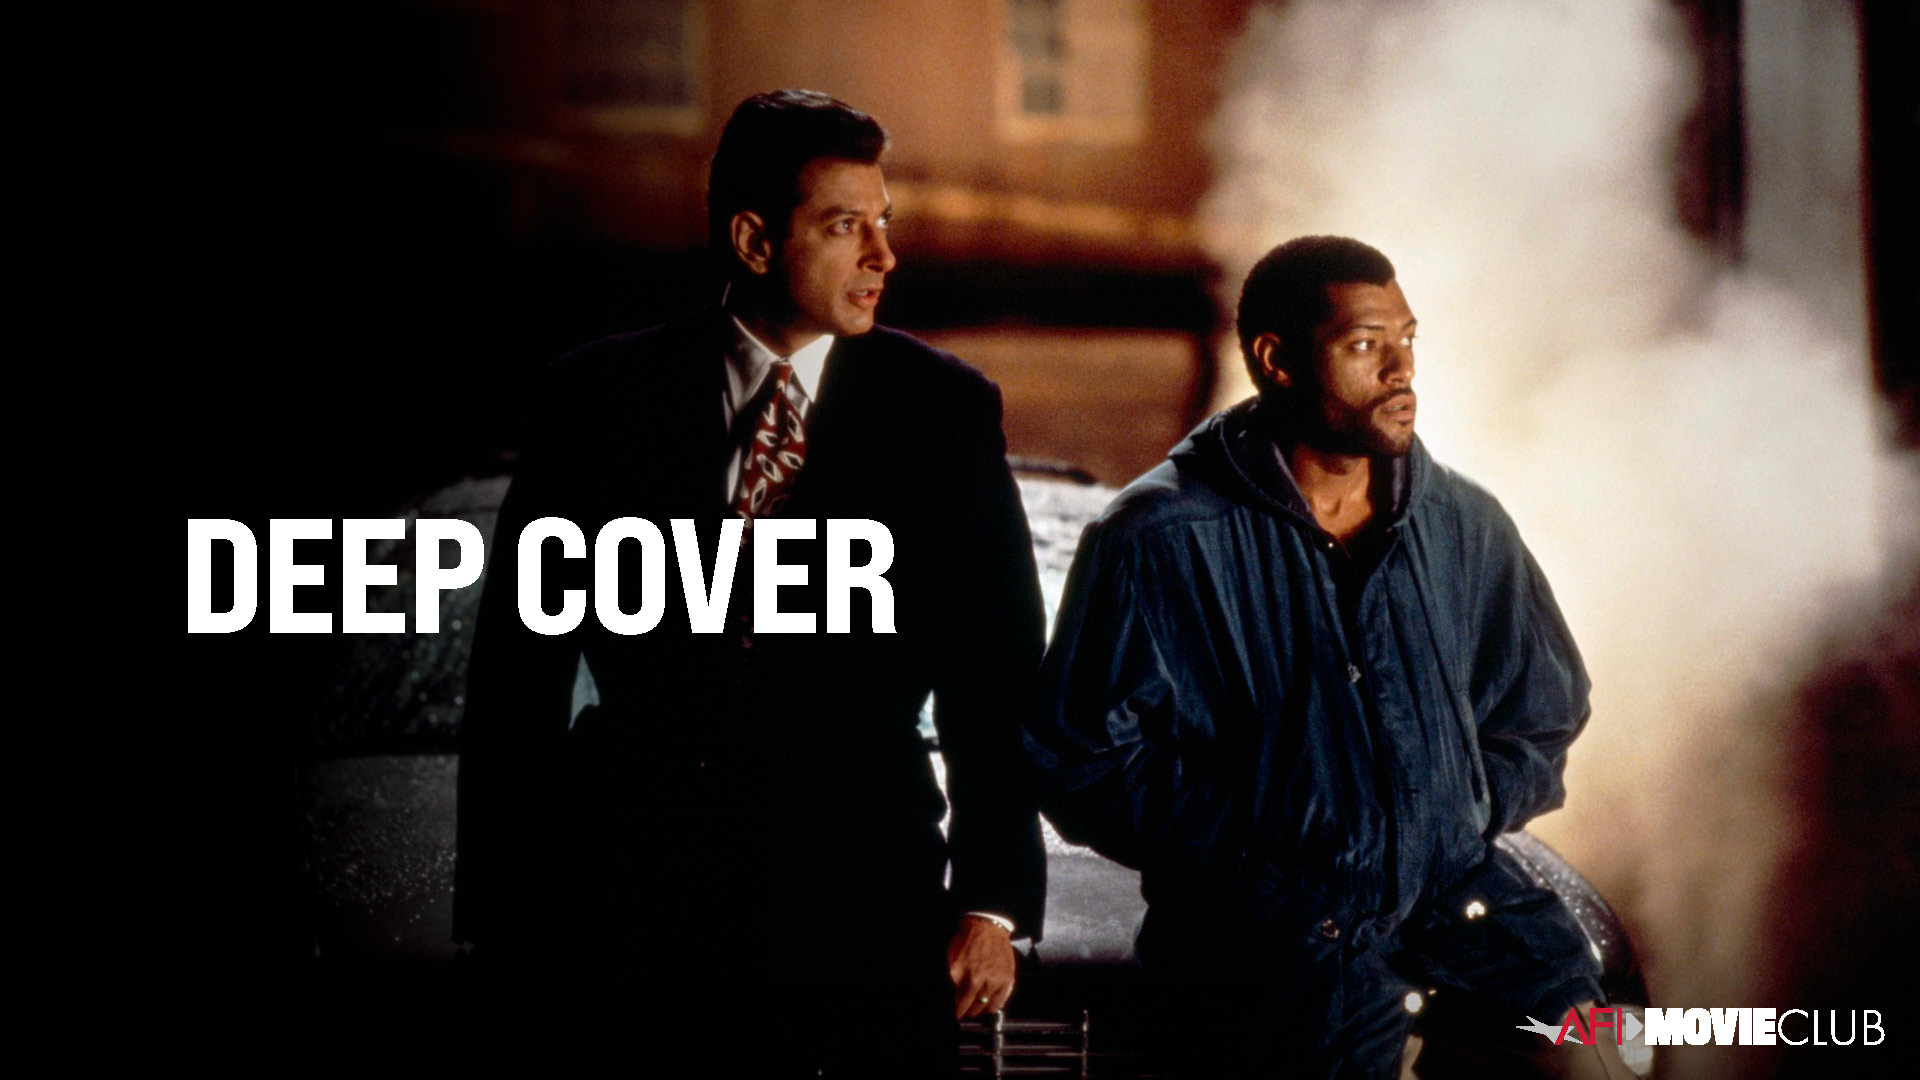 Deep Cover Film Still - Jeff Goldblum and Laurence Fishburne